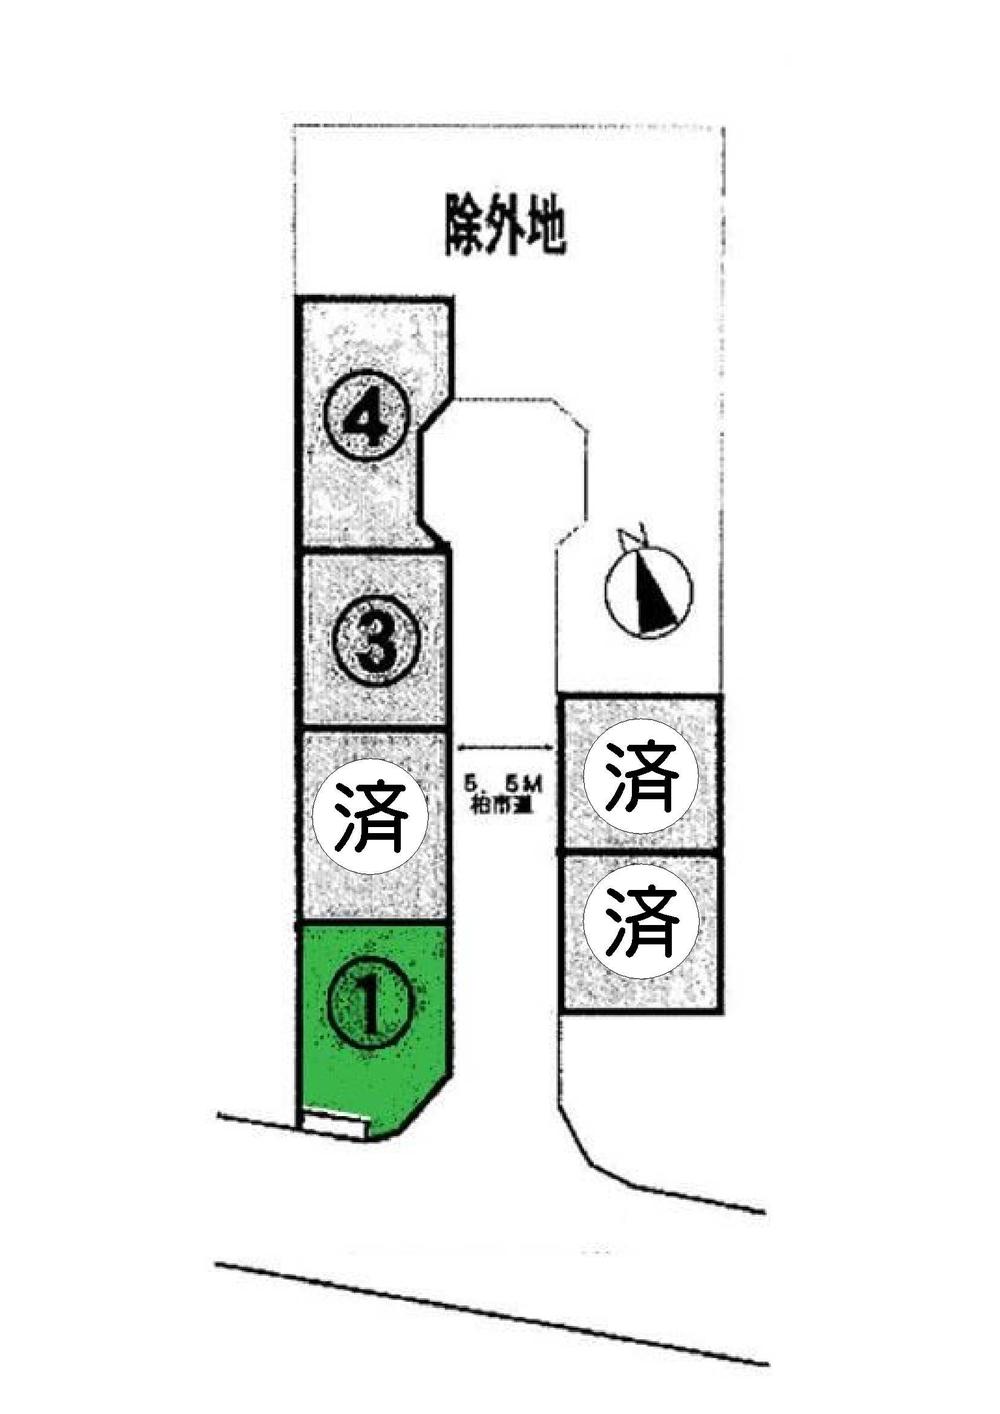 Compartment figure. Land price 12 million yen, Land area 147.18 sq m